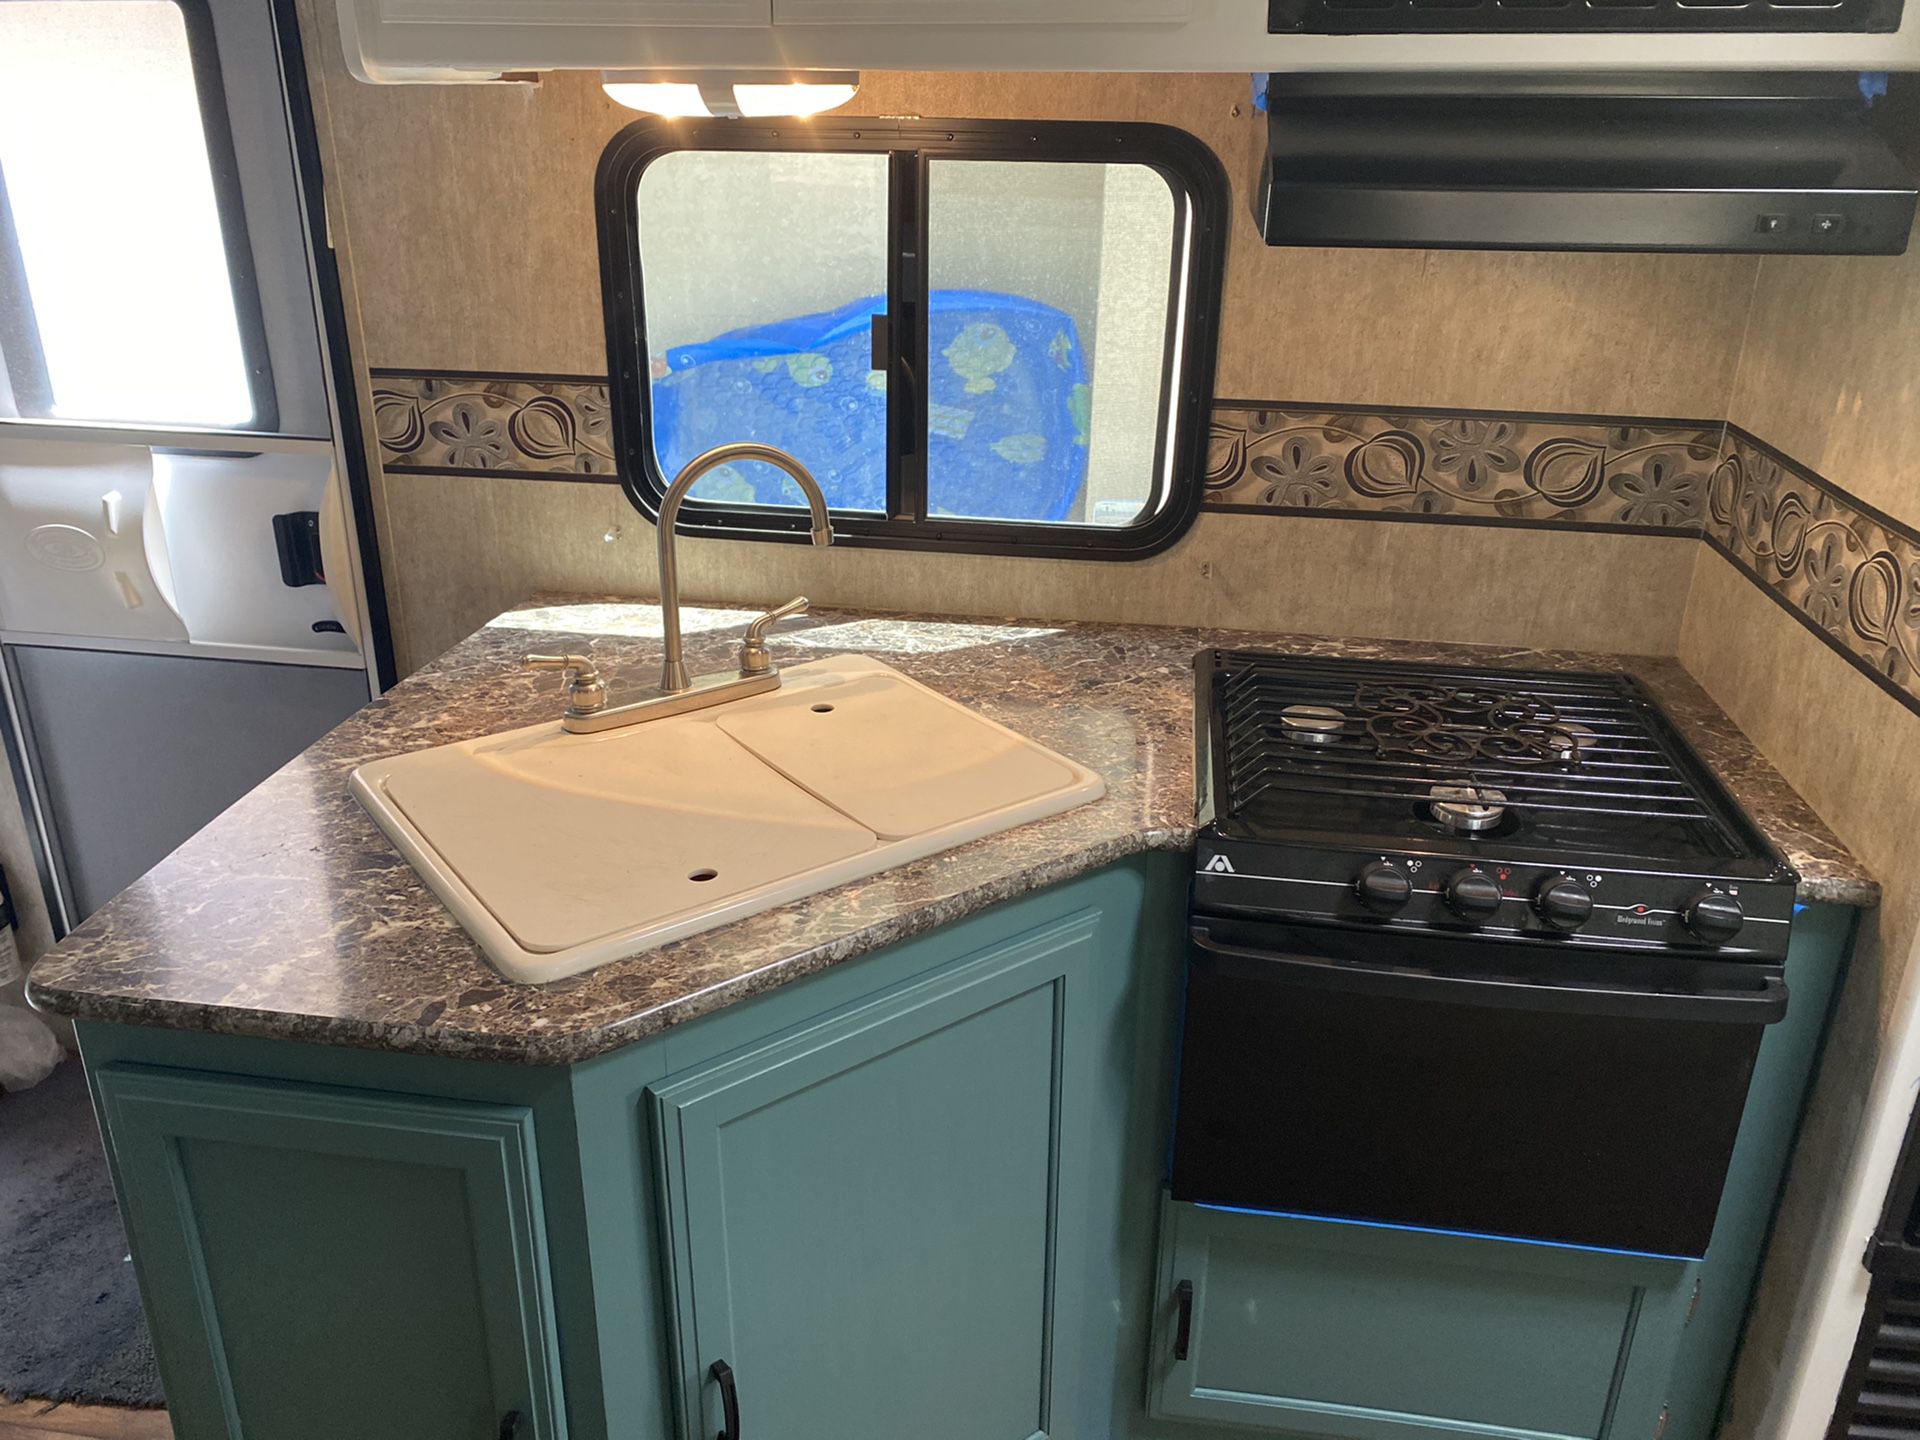 Keystone Passport RV kitchen and bathroom countertops for sale. Perfect Condition